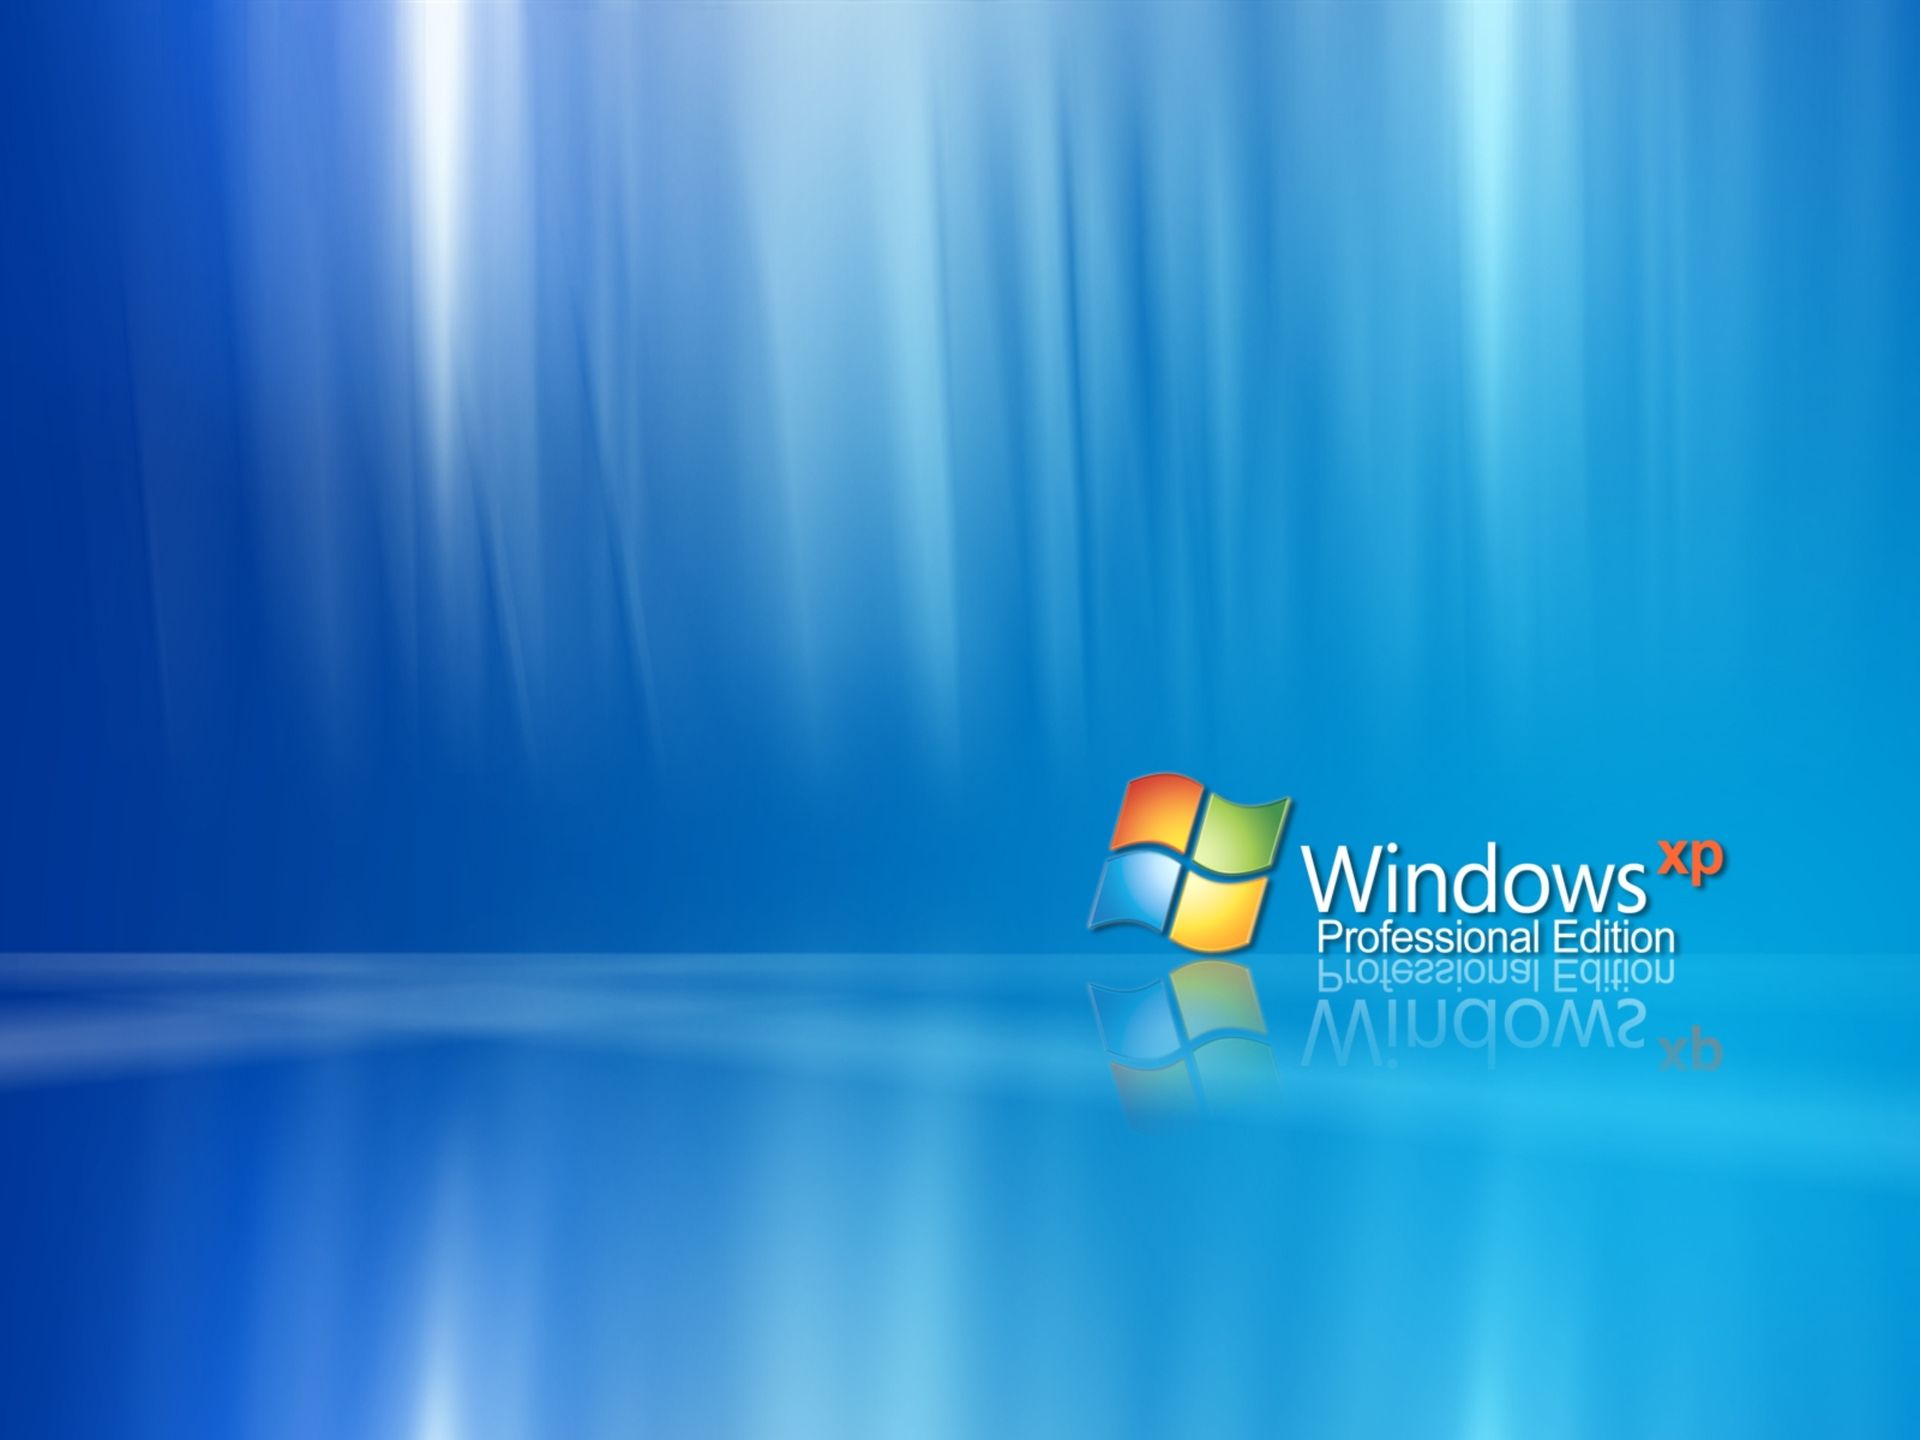 Microsoft reverses Windows XP security stance